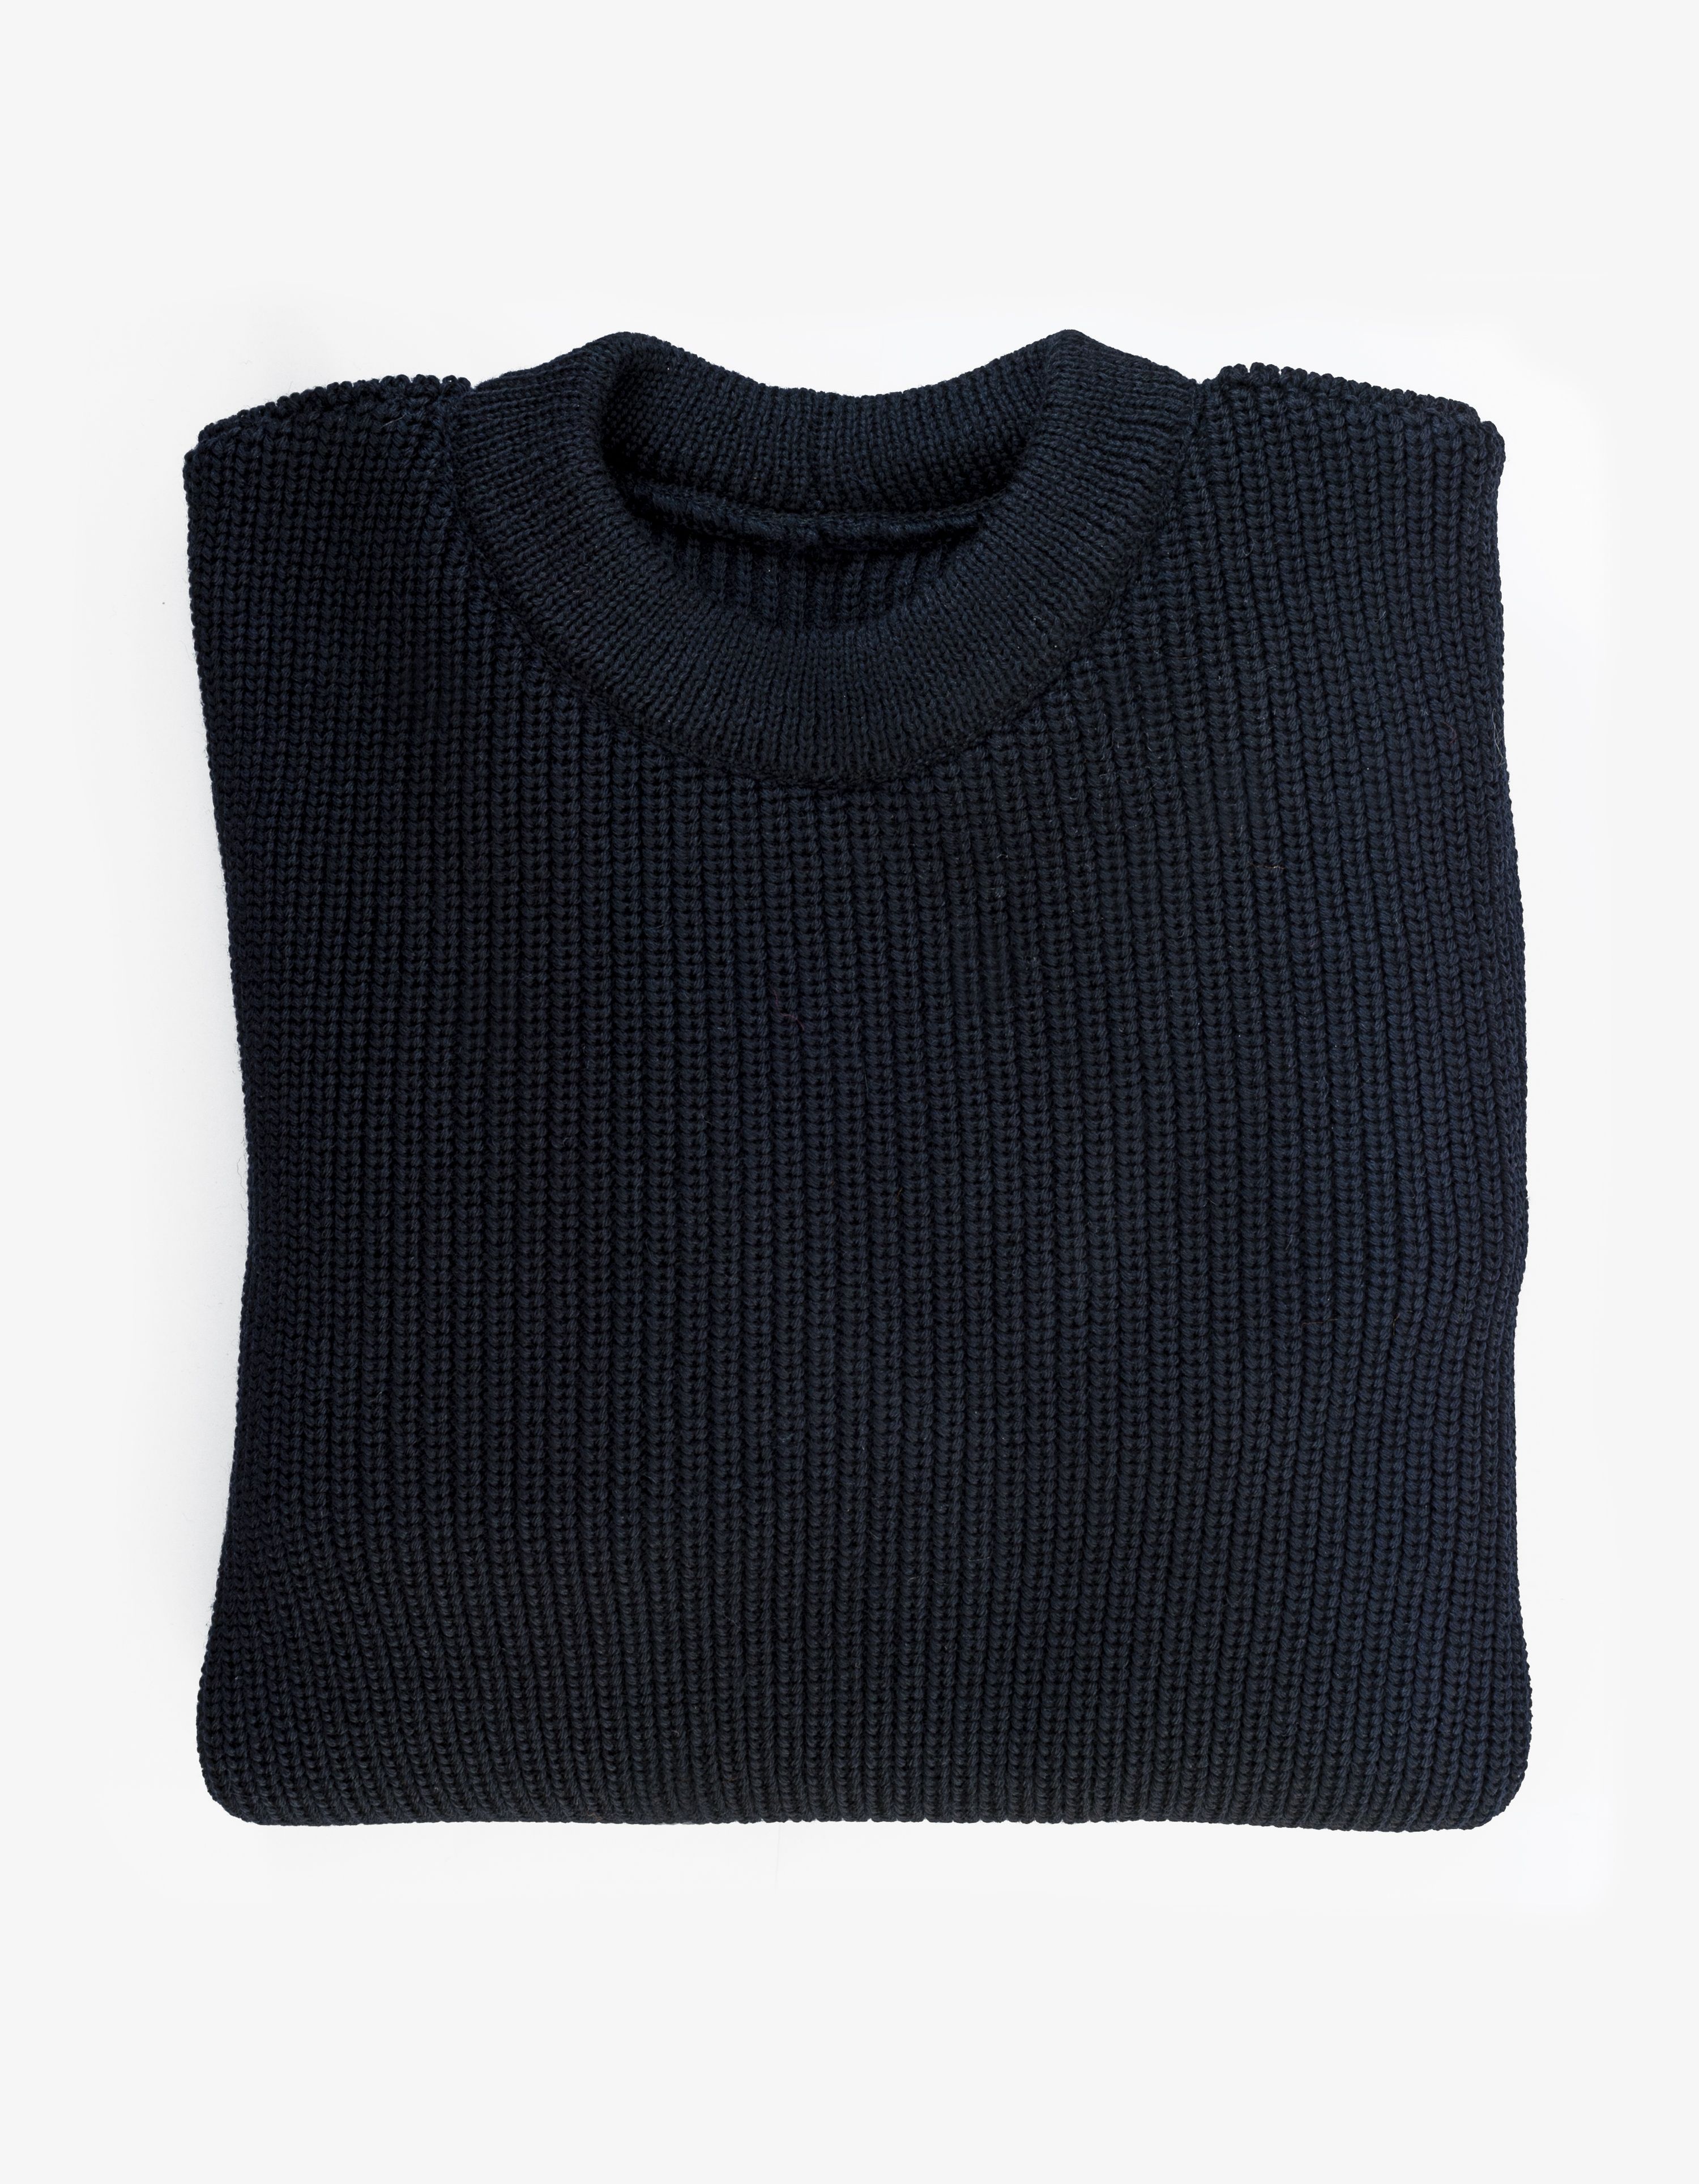 wool sweater – 1 of 3